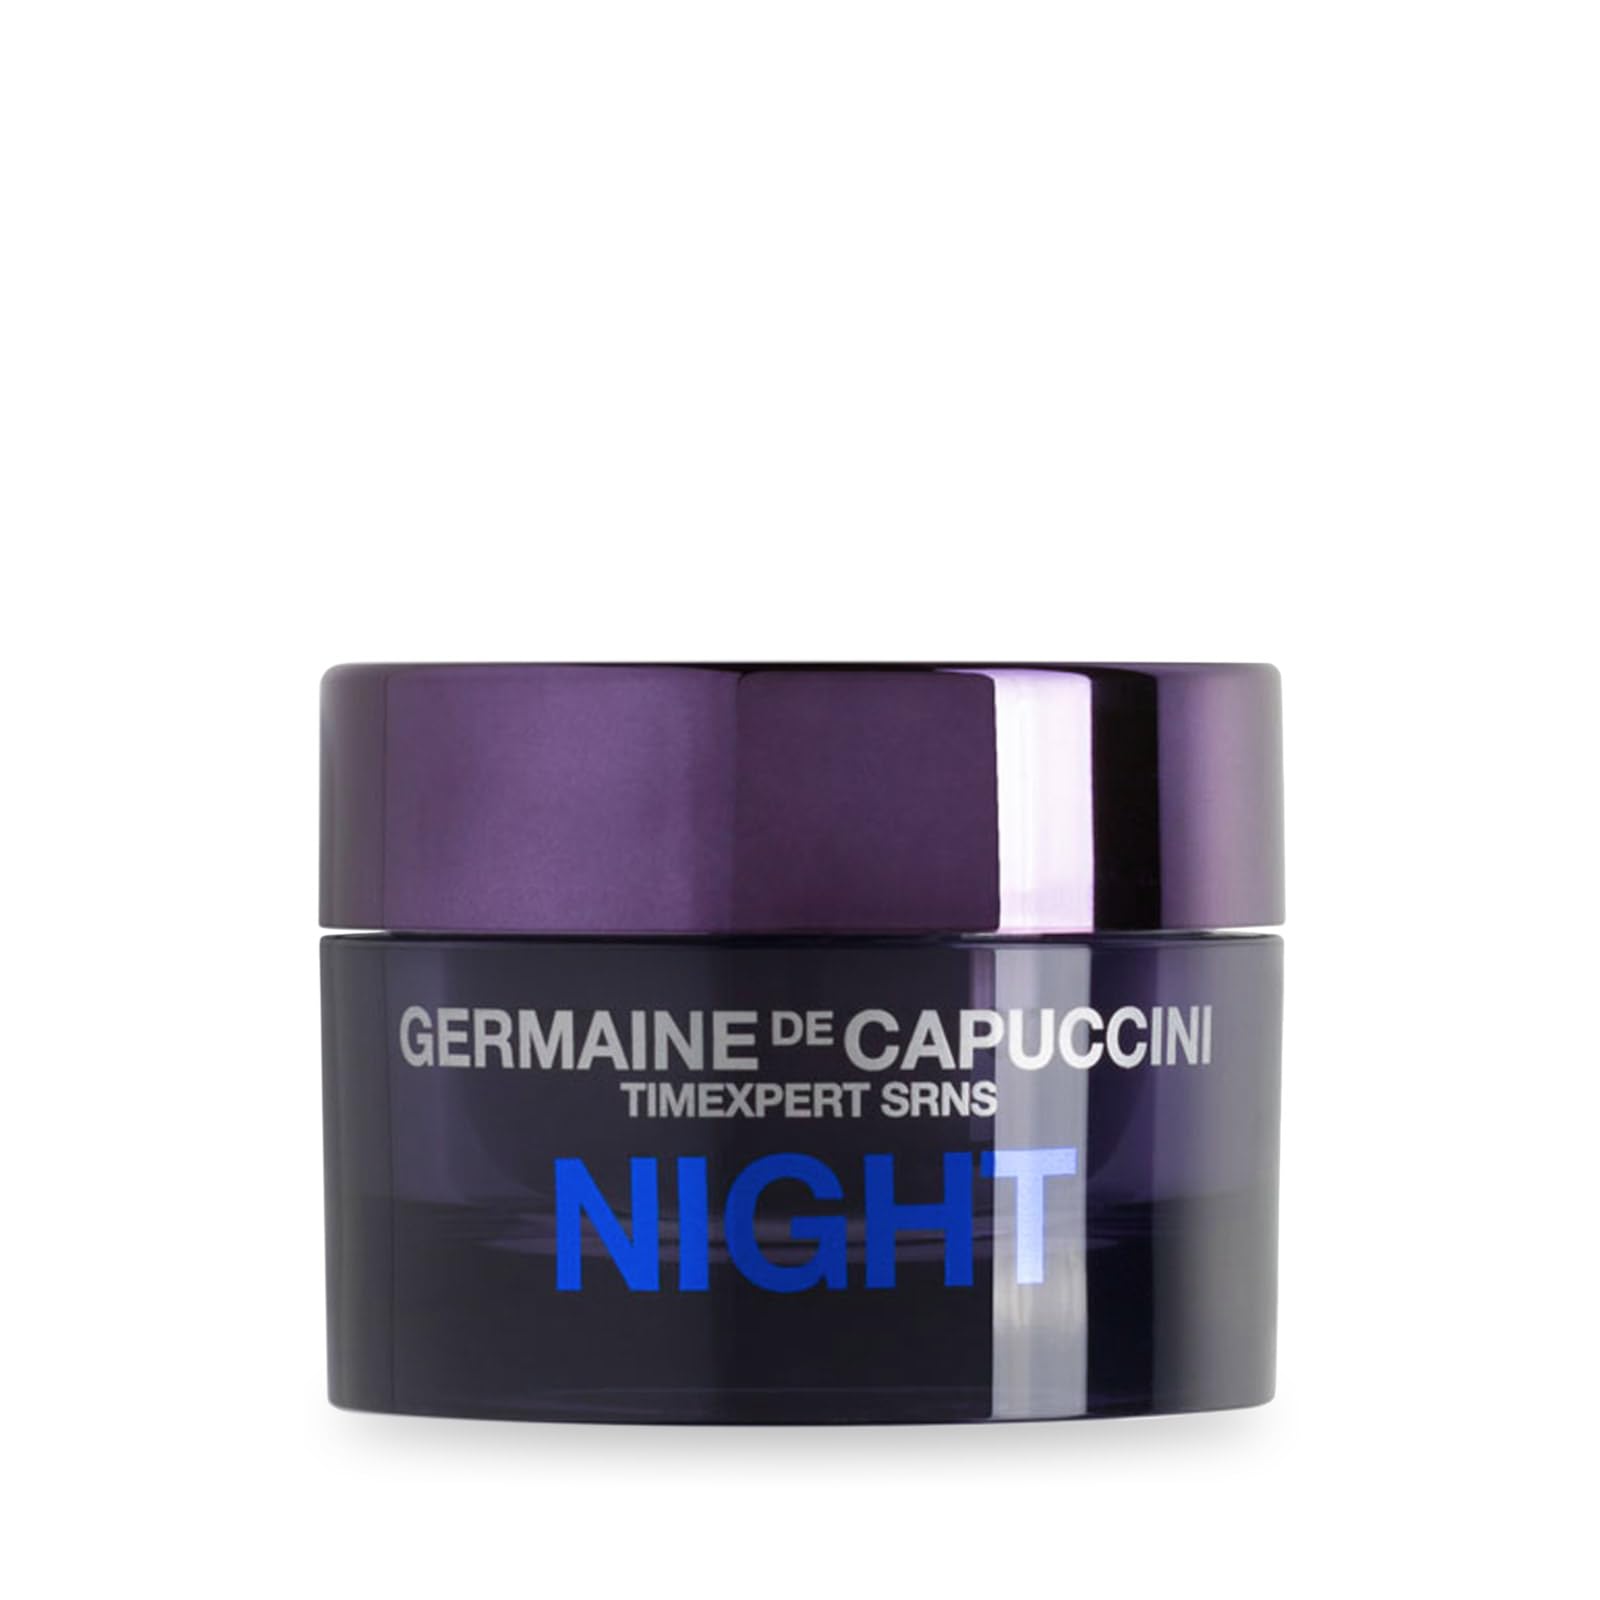 Germaine De Capuccini Timexpert Srns Night High Recovery Comfort Cream 50ml